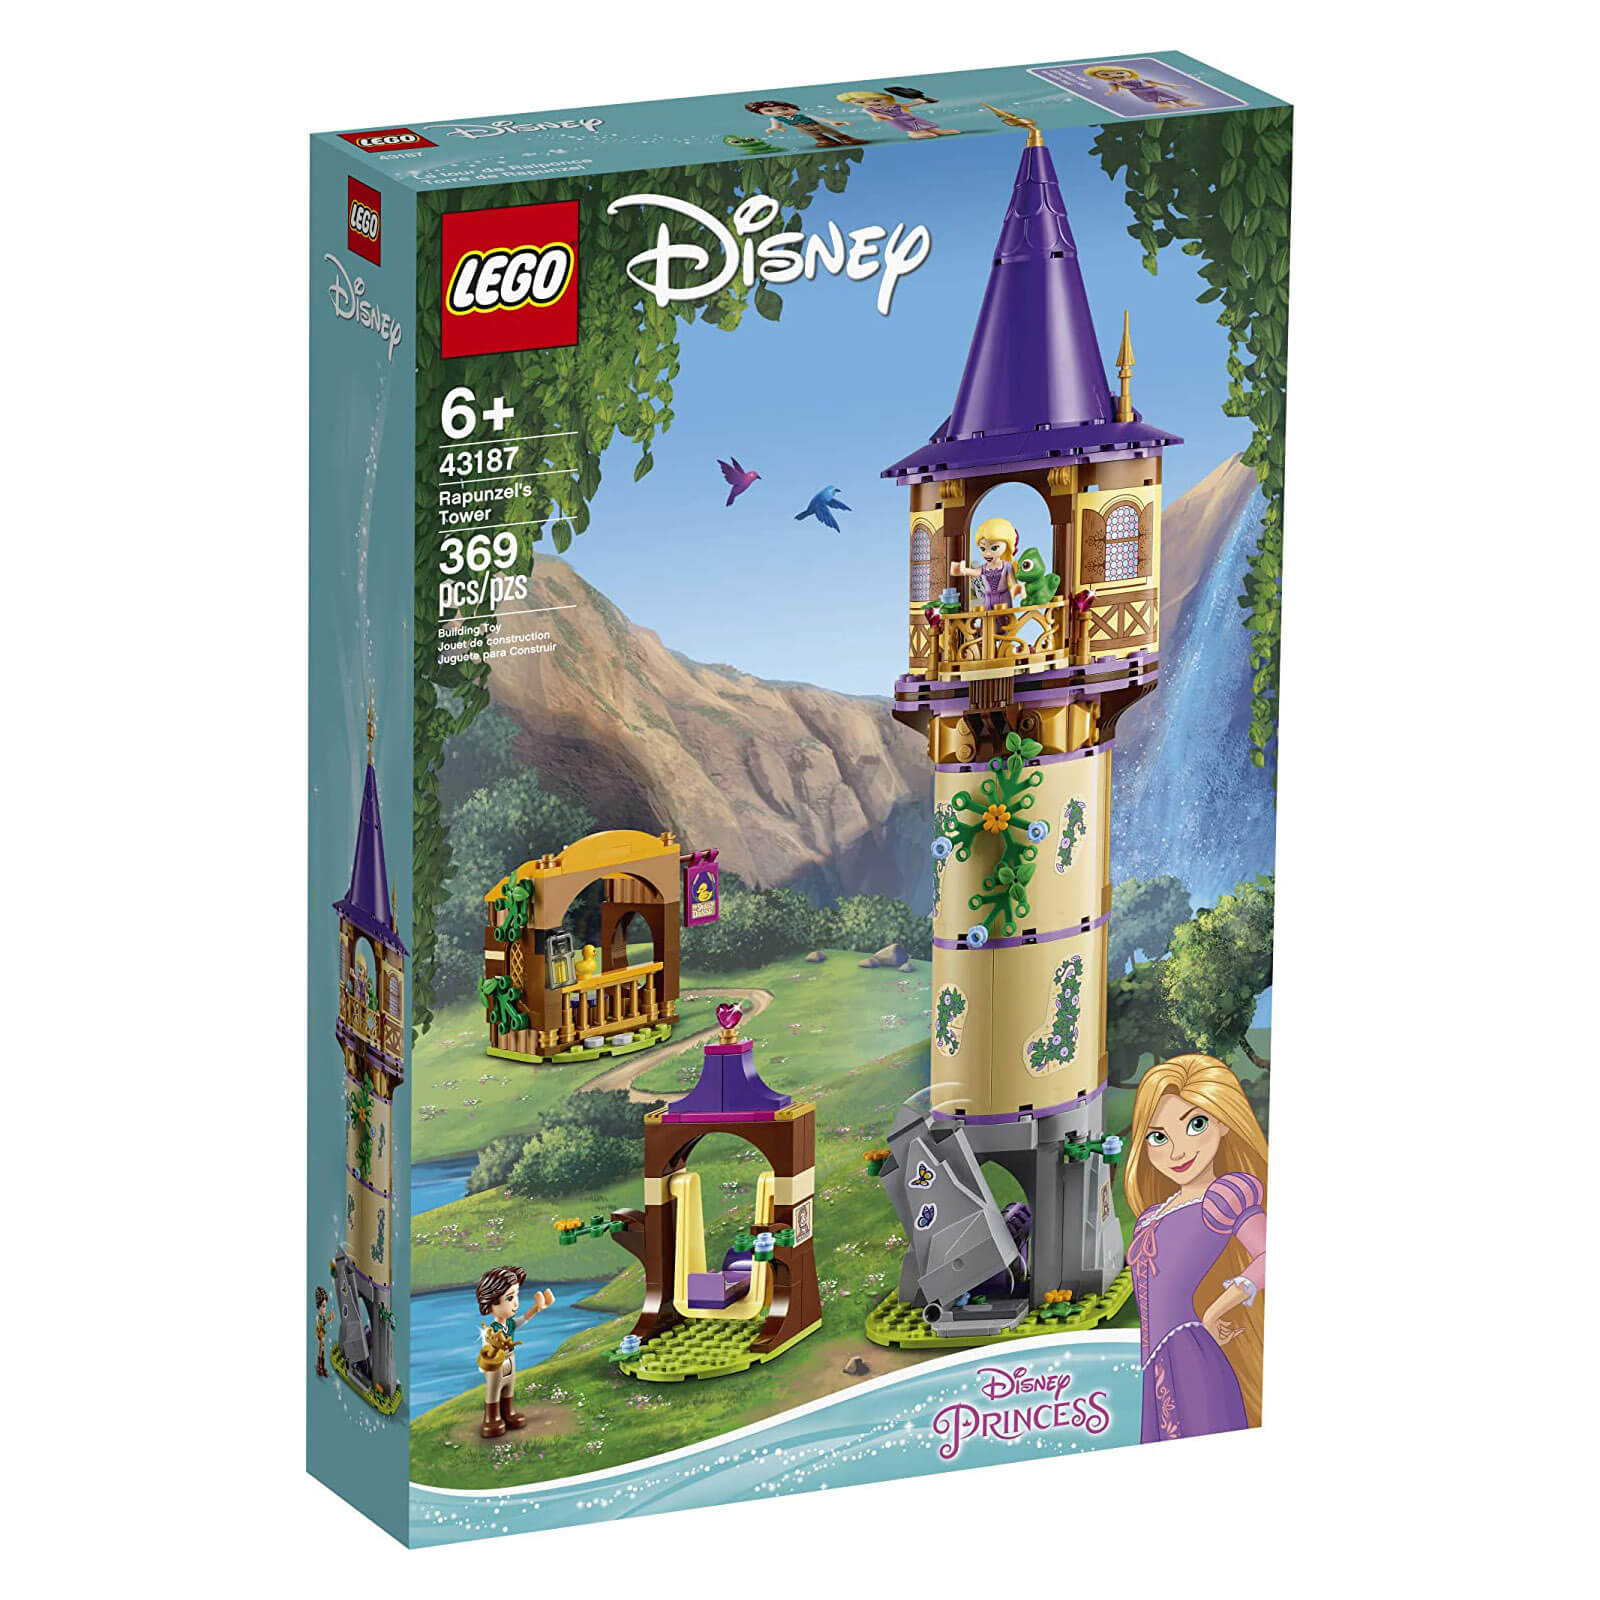 LEGO Disney Princess Rapunzel's Tower 369 Piece Building Set (43187)